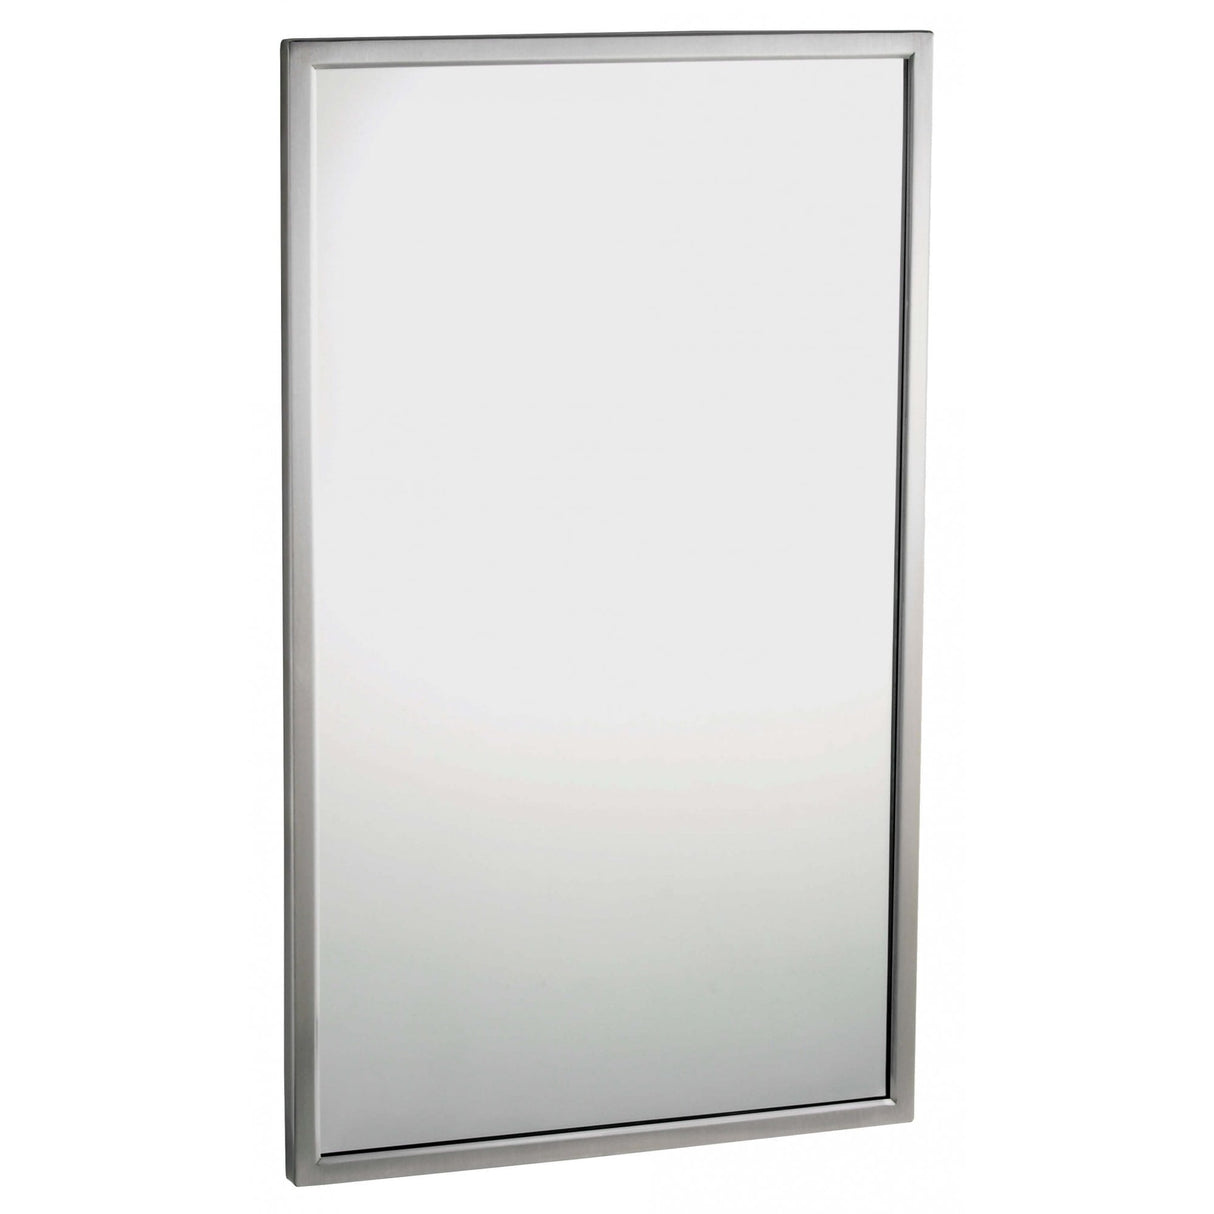 B-290 2436 Bathroom Vanity Mirror with Welded Frame (610x910)